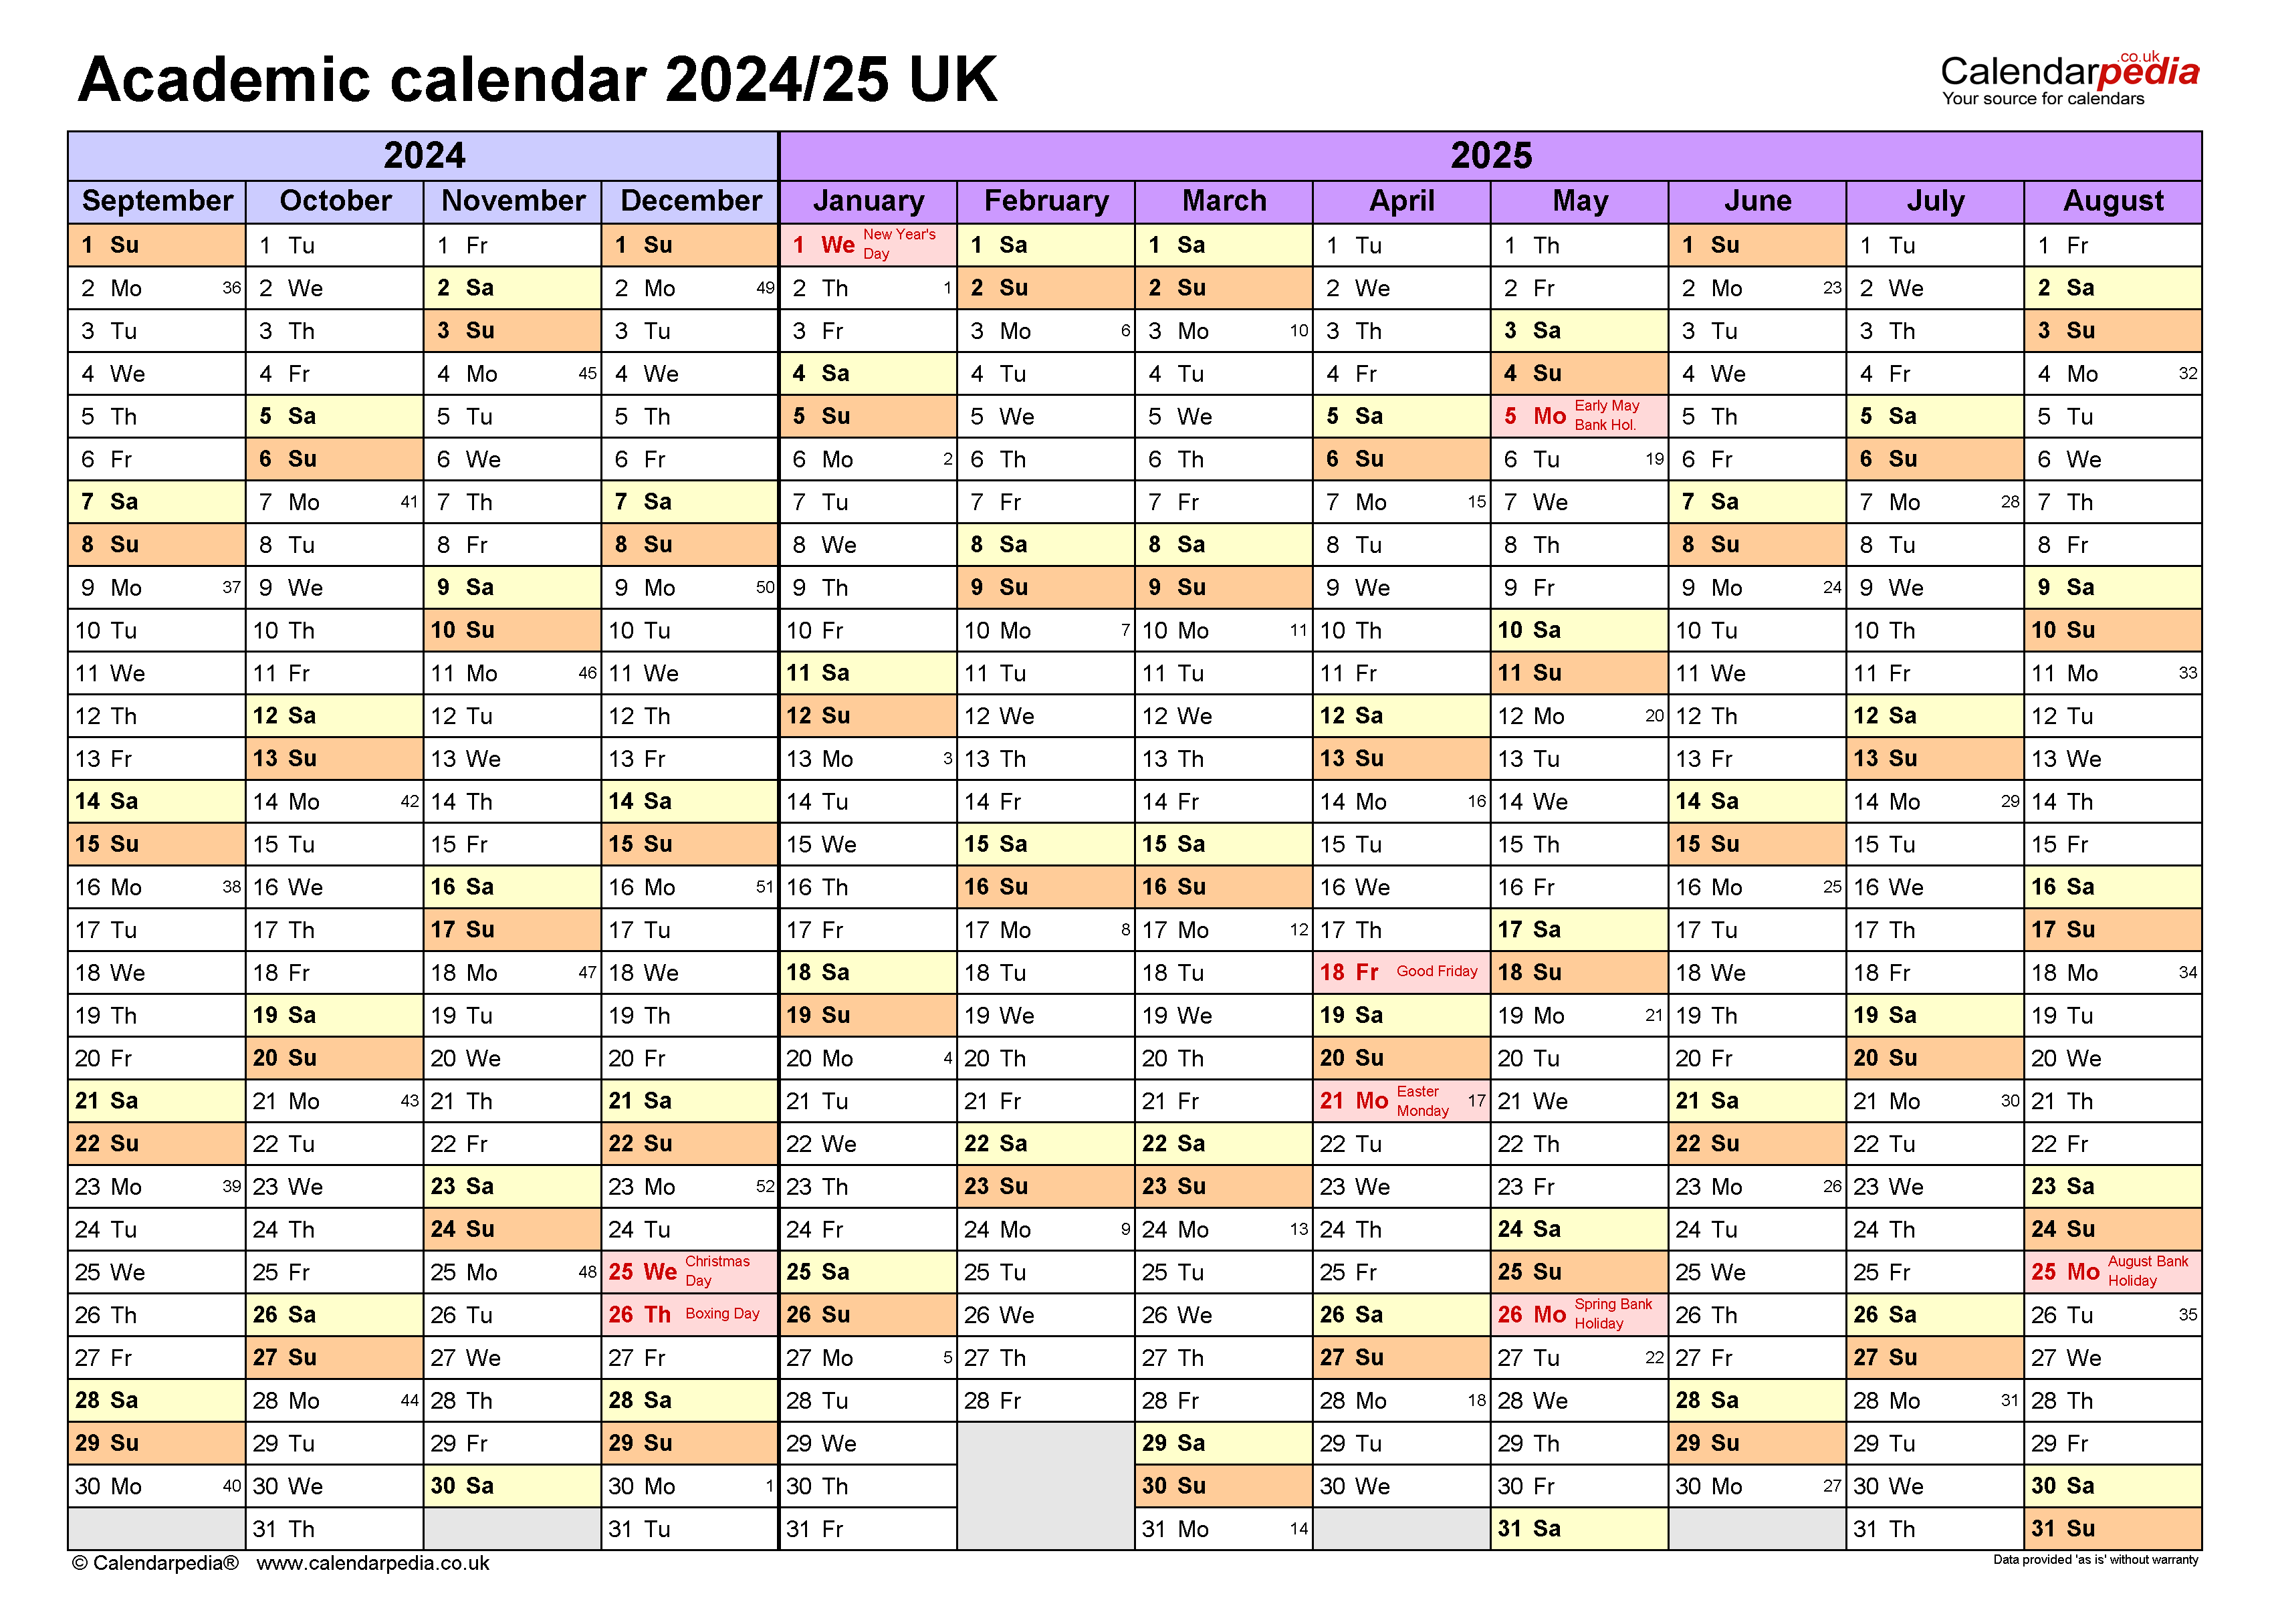 Academic Calendar 2024-25 - 2024 Calendar Printable